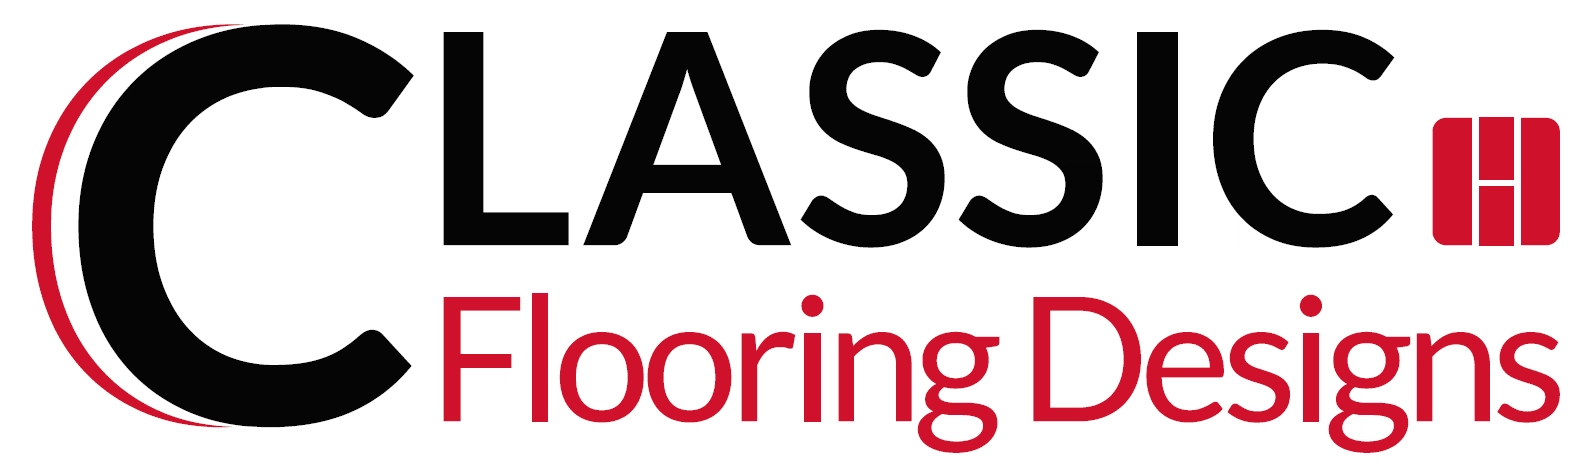 Classic Flooring Designs LLC Logo